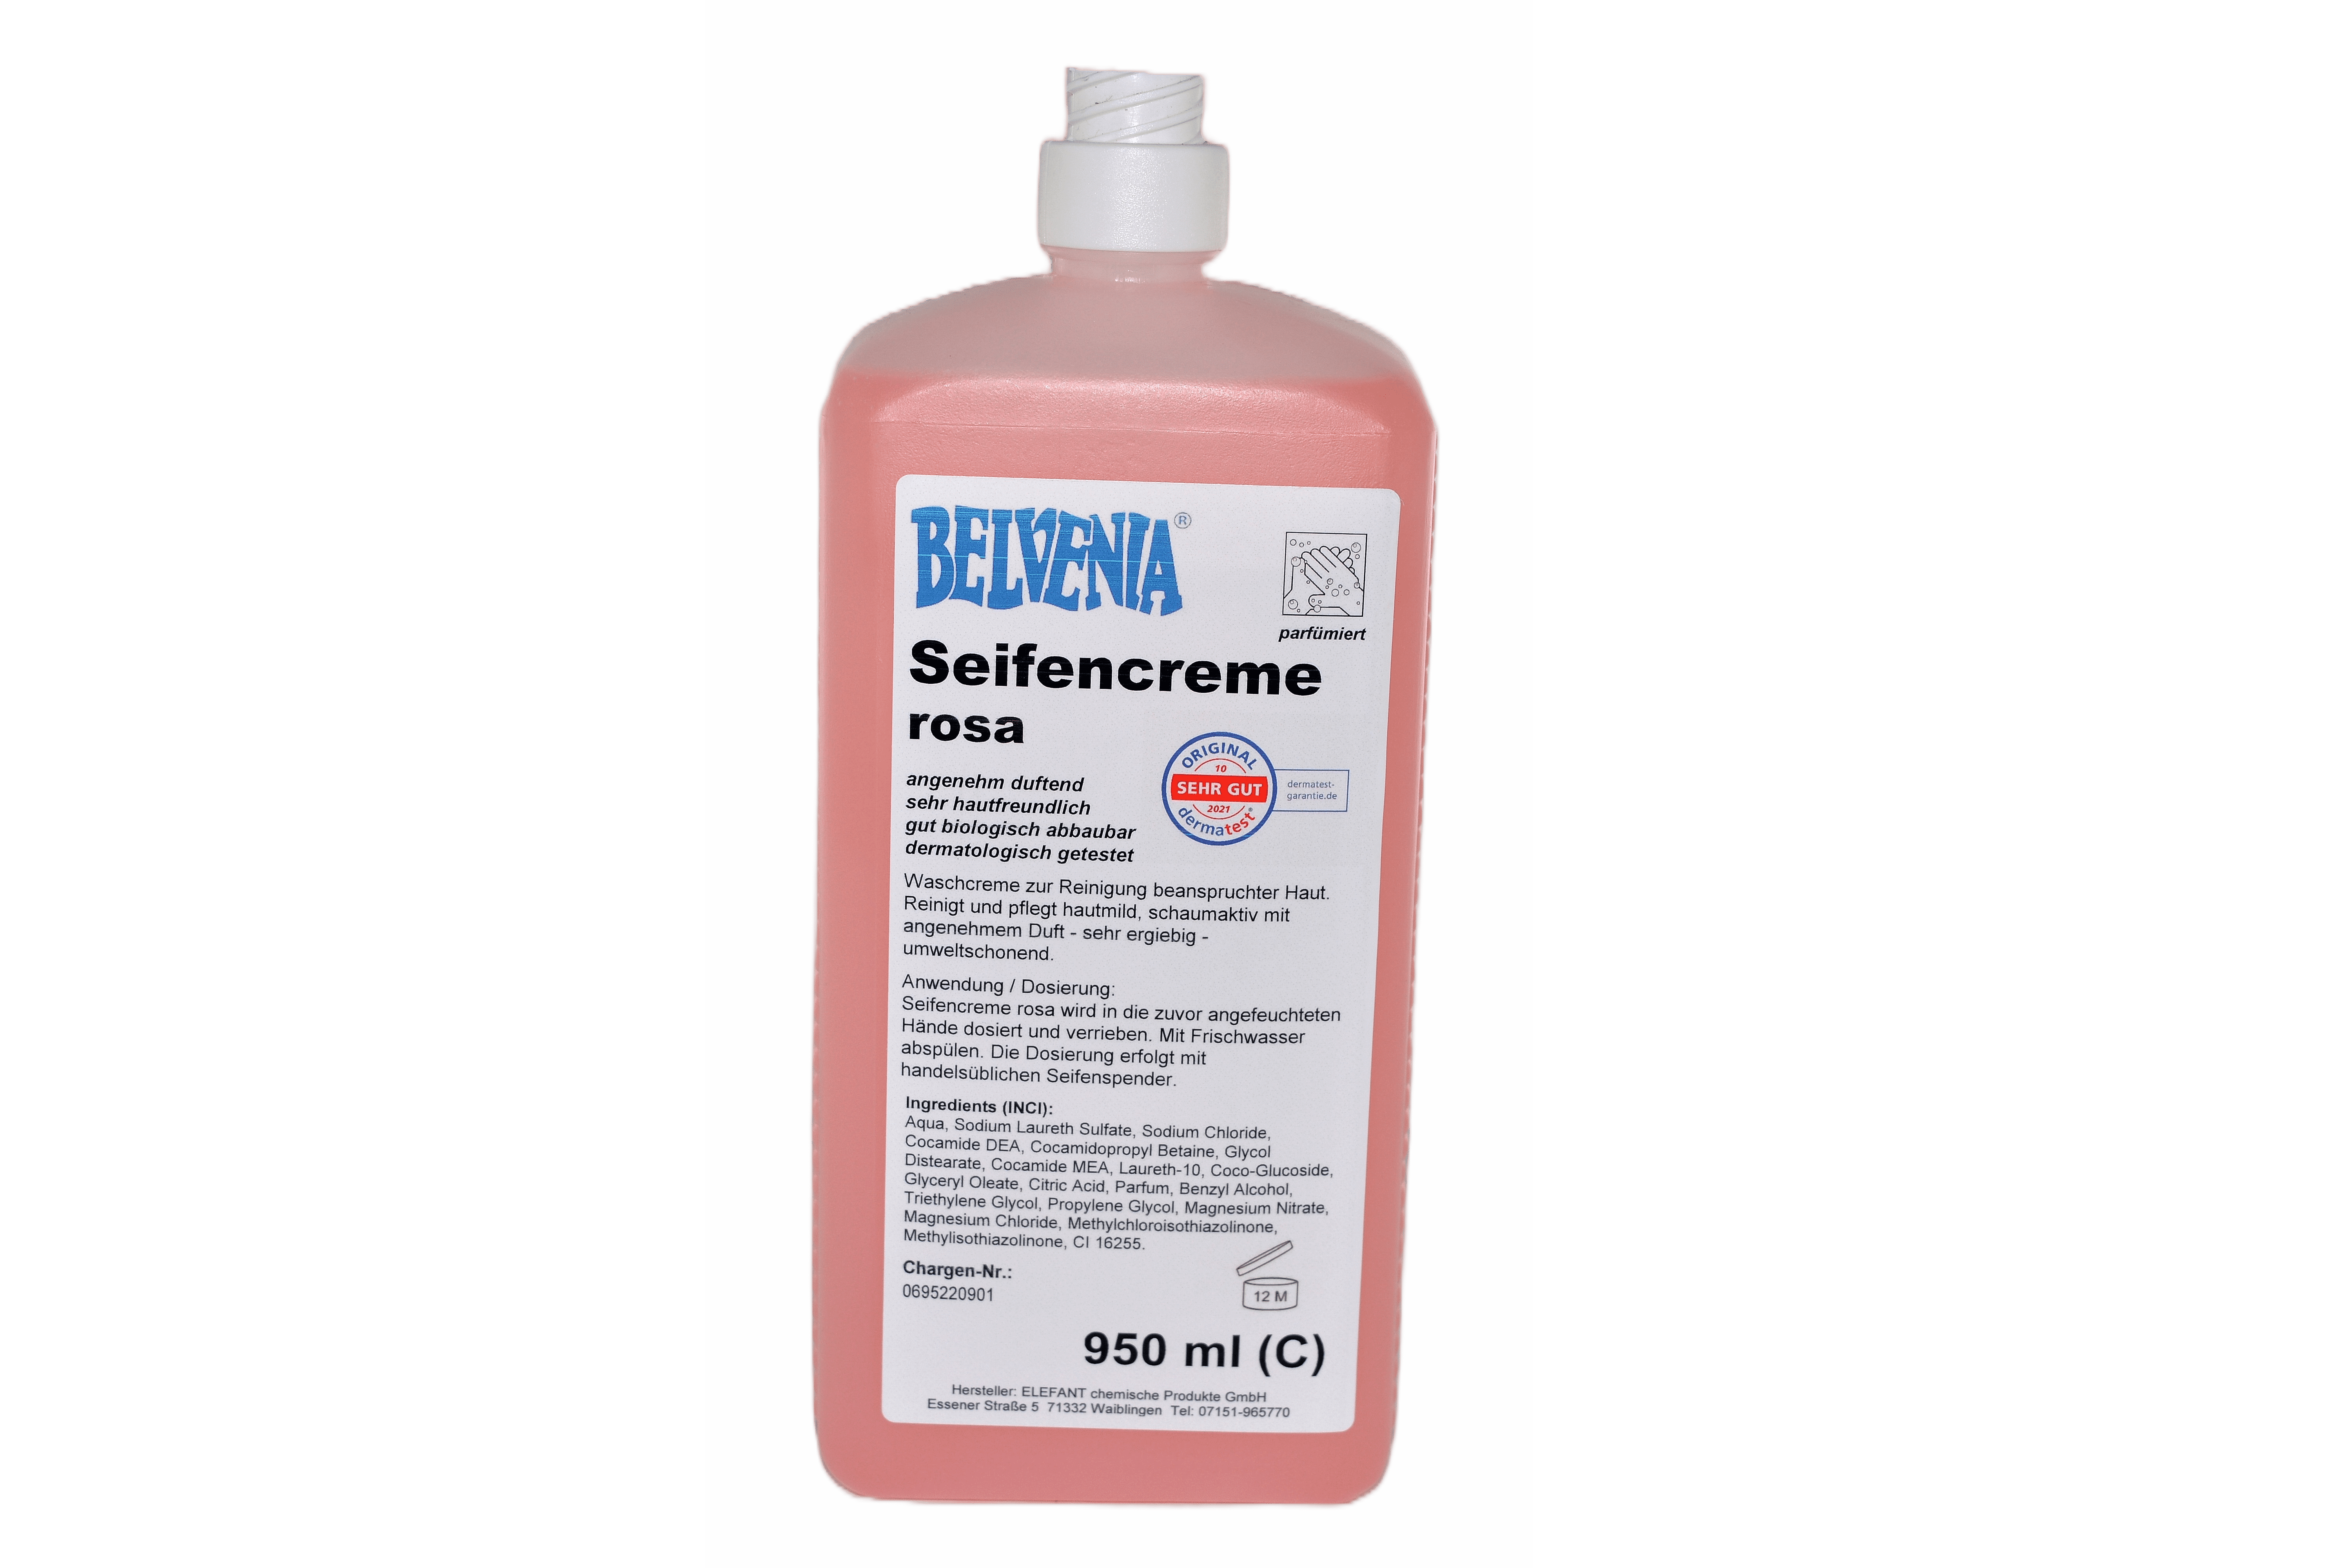 BELVENIA-Cremeseife rosa 950 ml Spenderflasche (C) Karton mit 12x950 ml